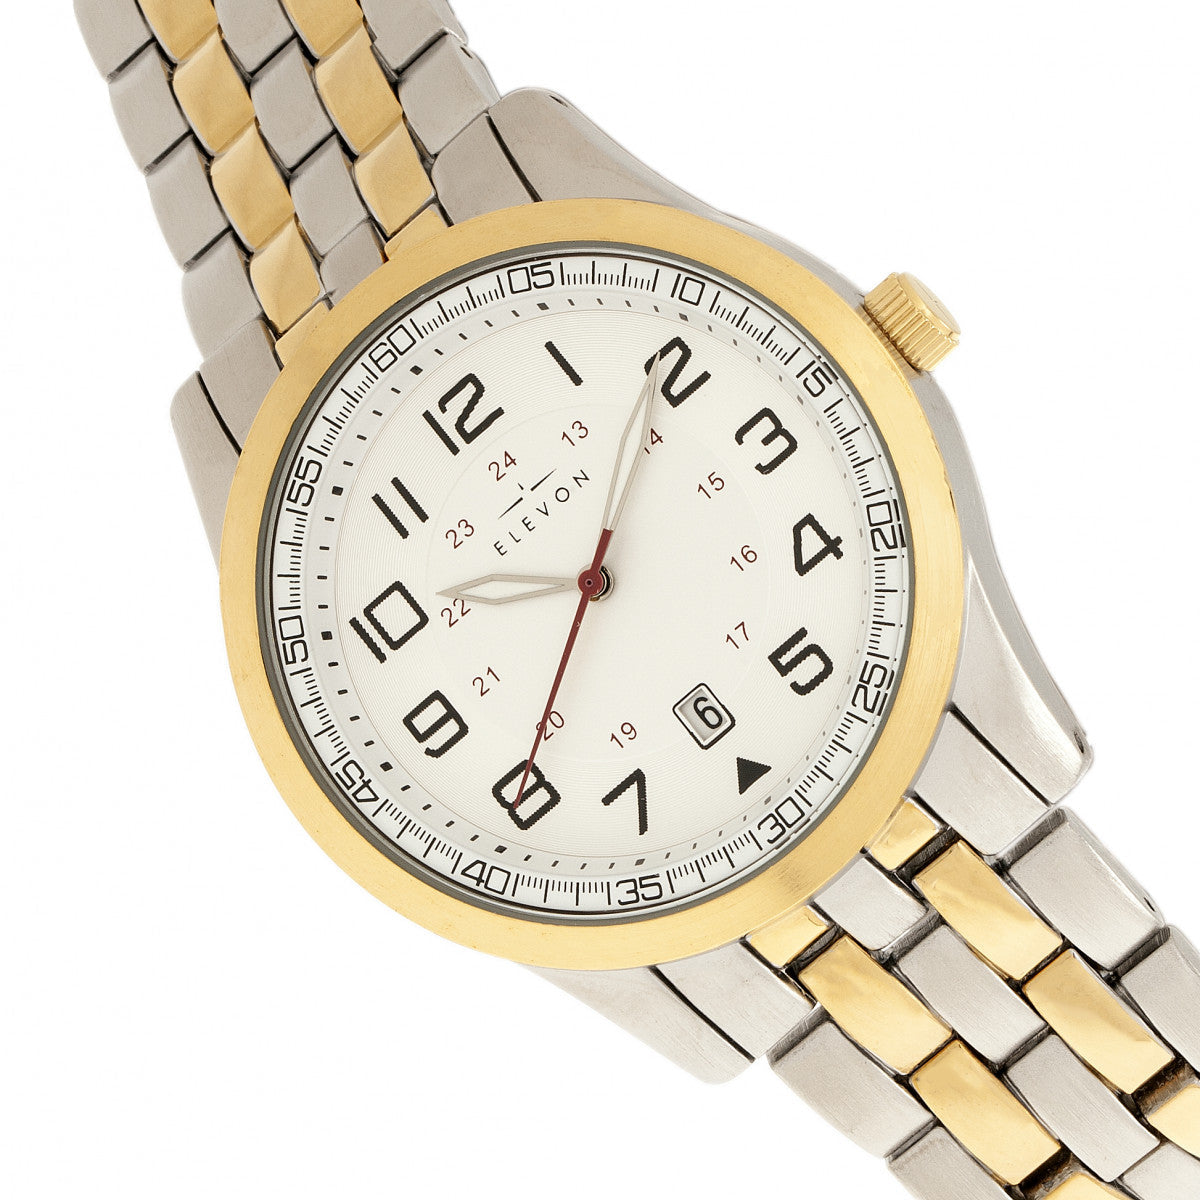 Elevon Garrison Bracelet Watch w/Date - Gold/White - ELE105-5